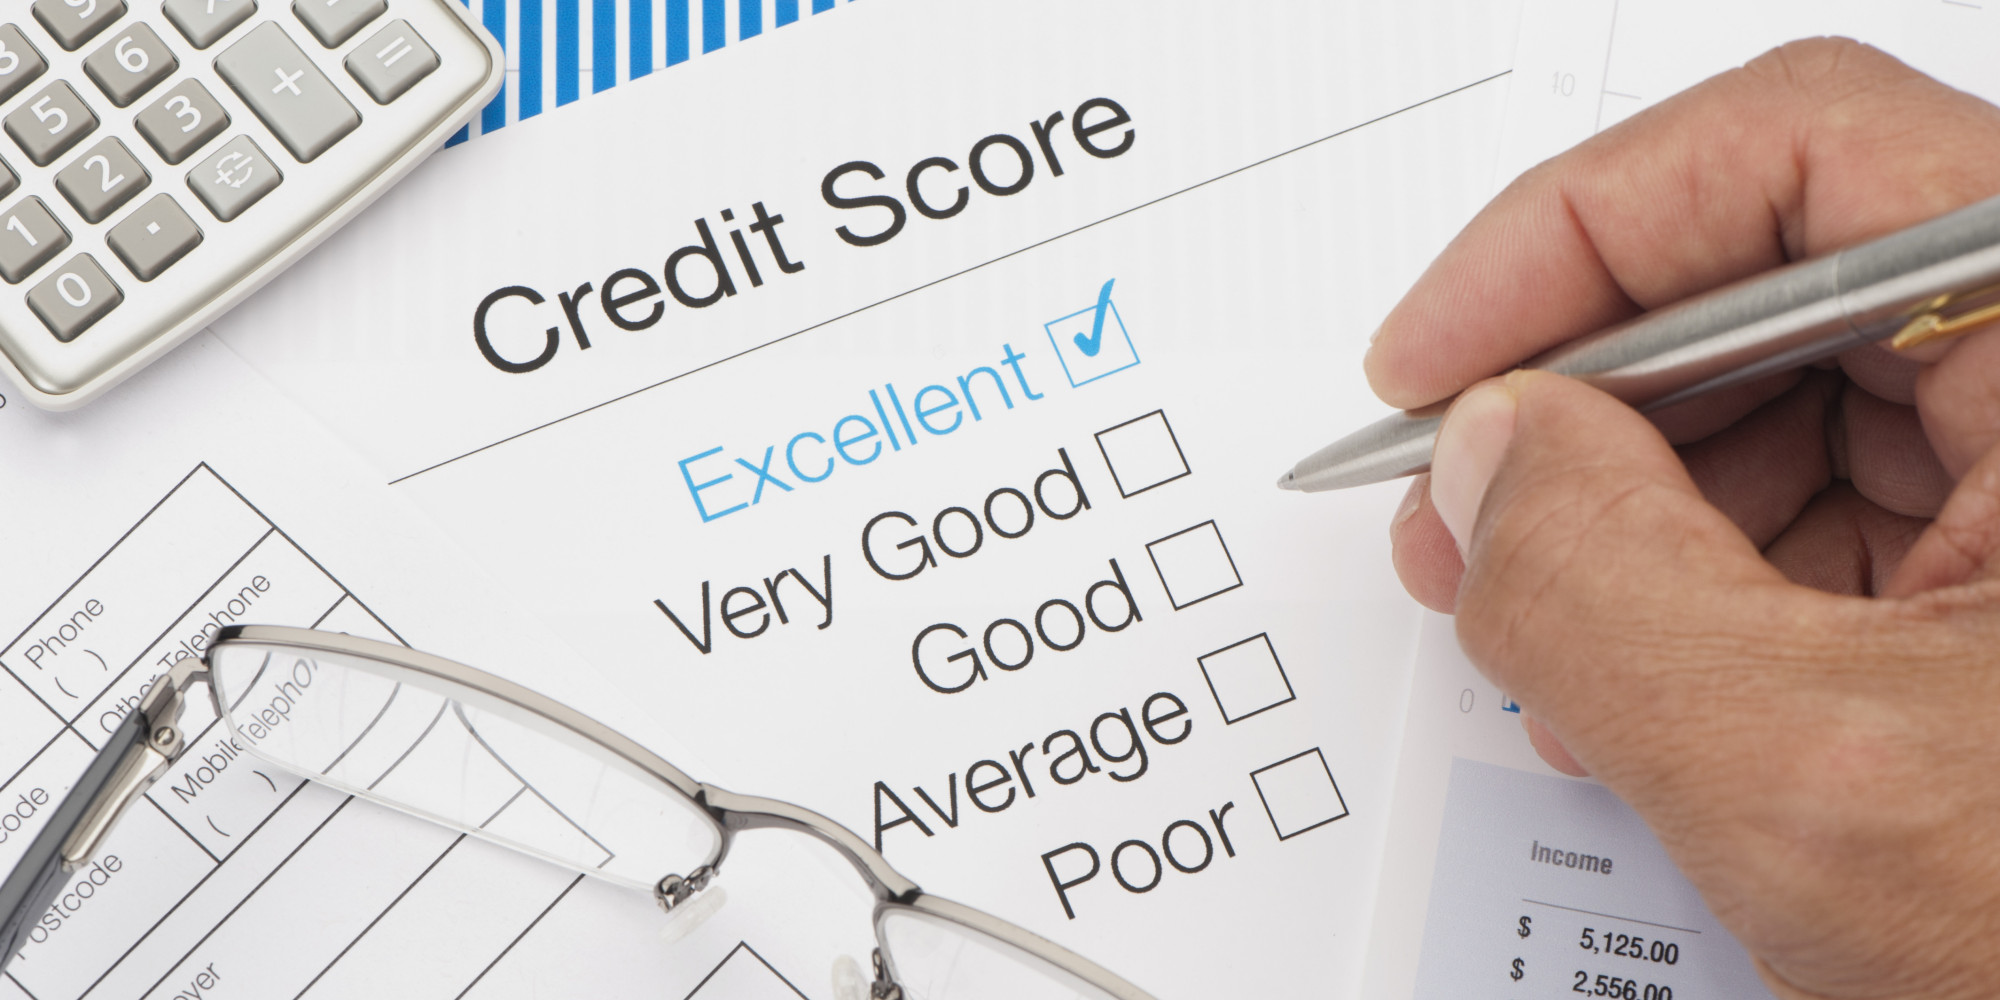 3 Myths We Still Believe About Credit Scores